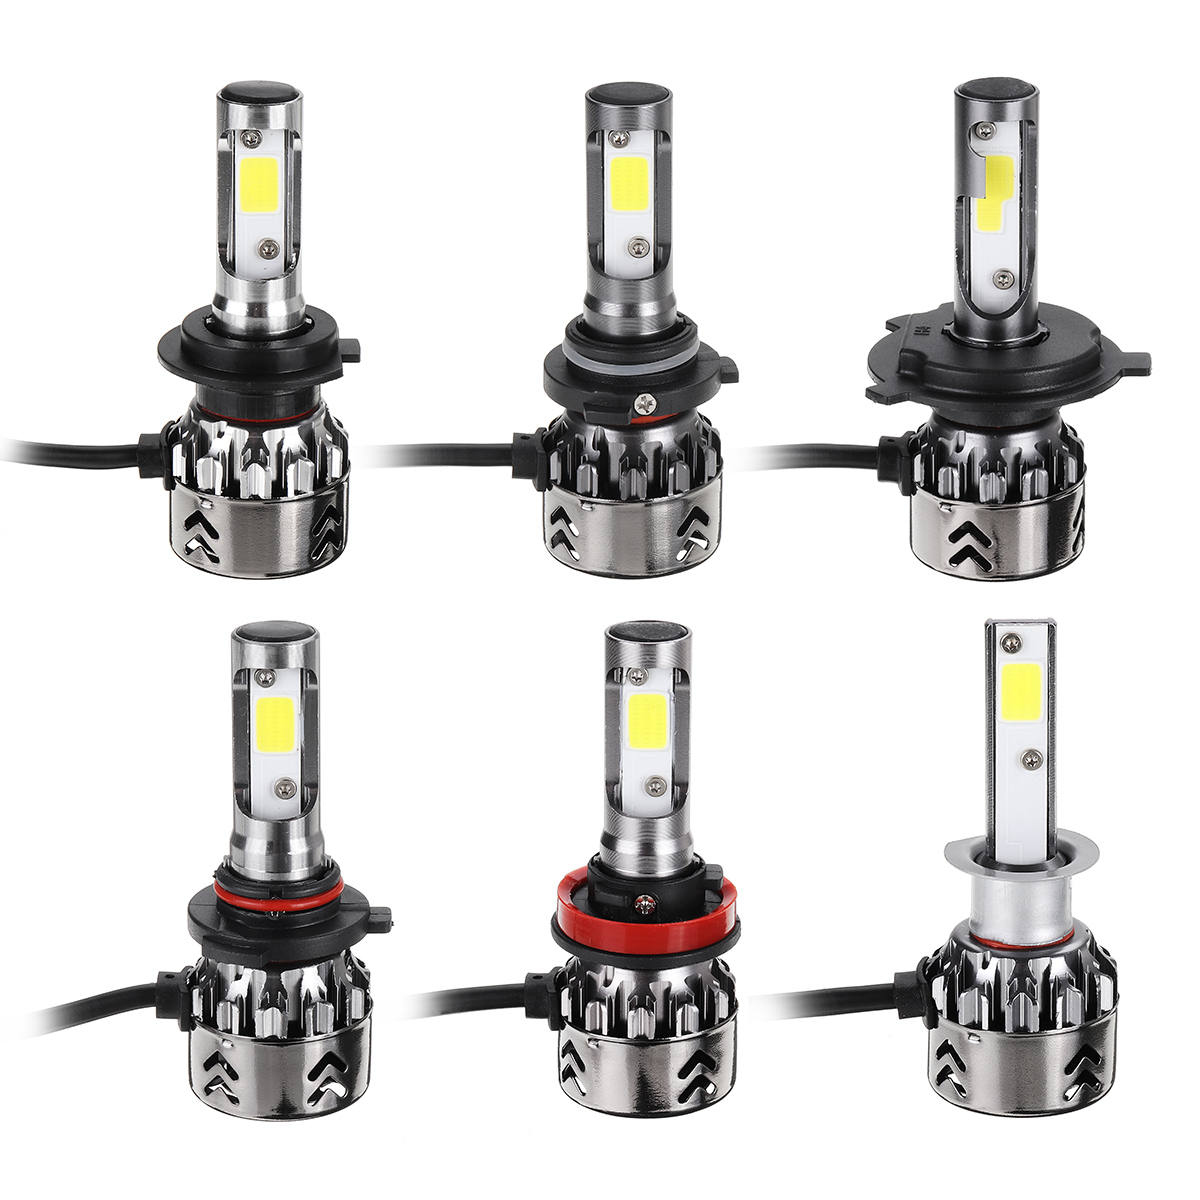 60W Car LED Headlights Bulbs Fog Lamps H1 H4 H7 H11 9005 9006 9V-36V 6000LM 6000K Universal